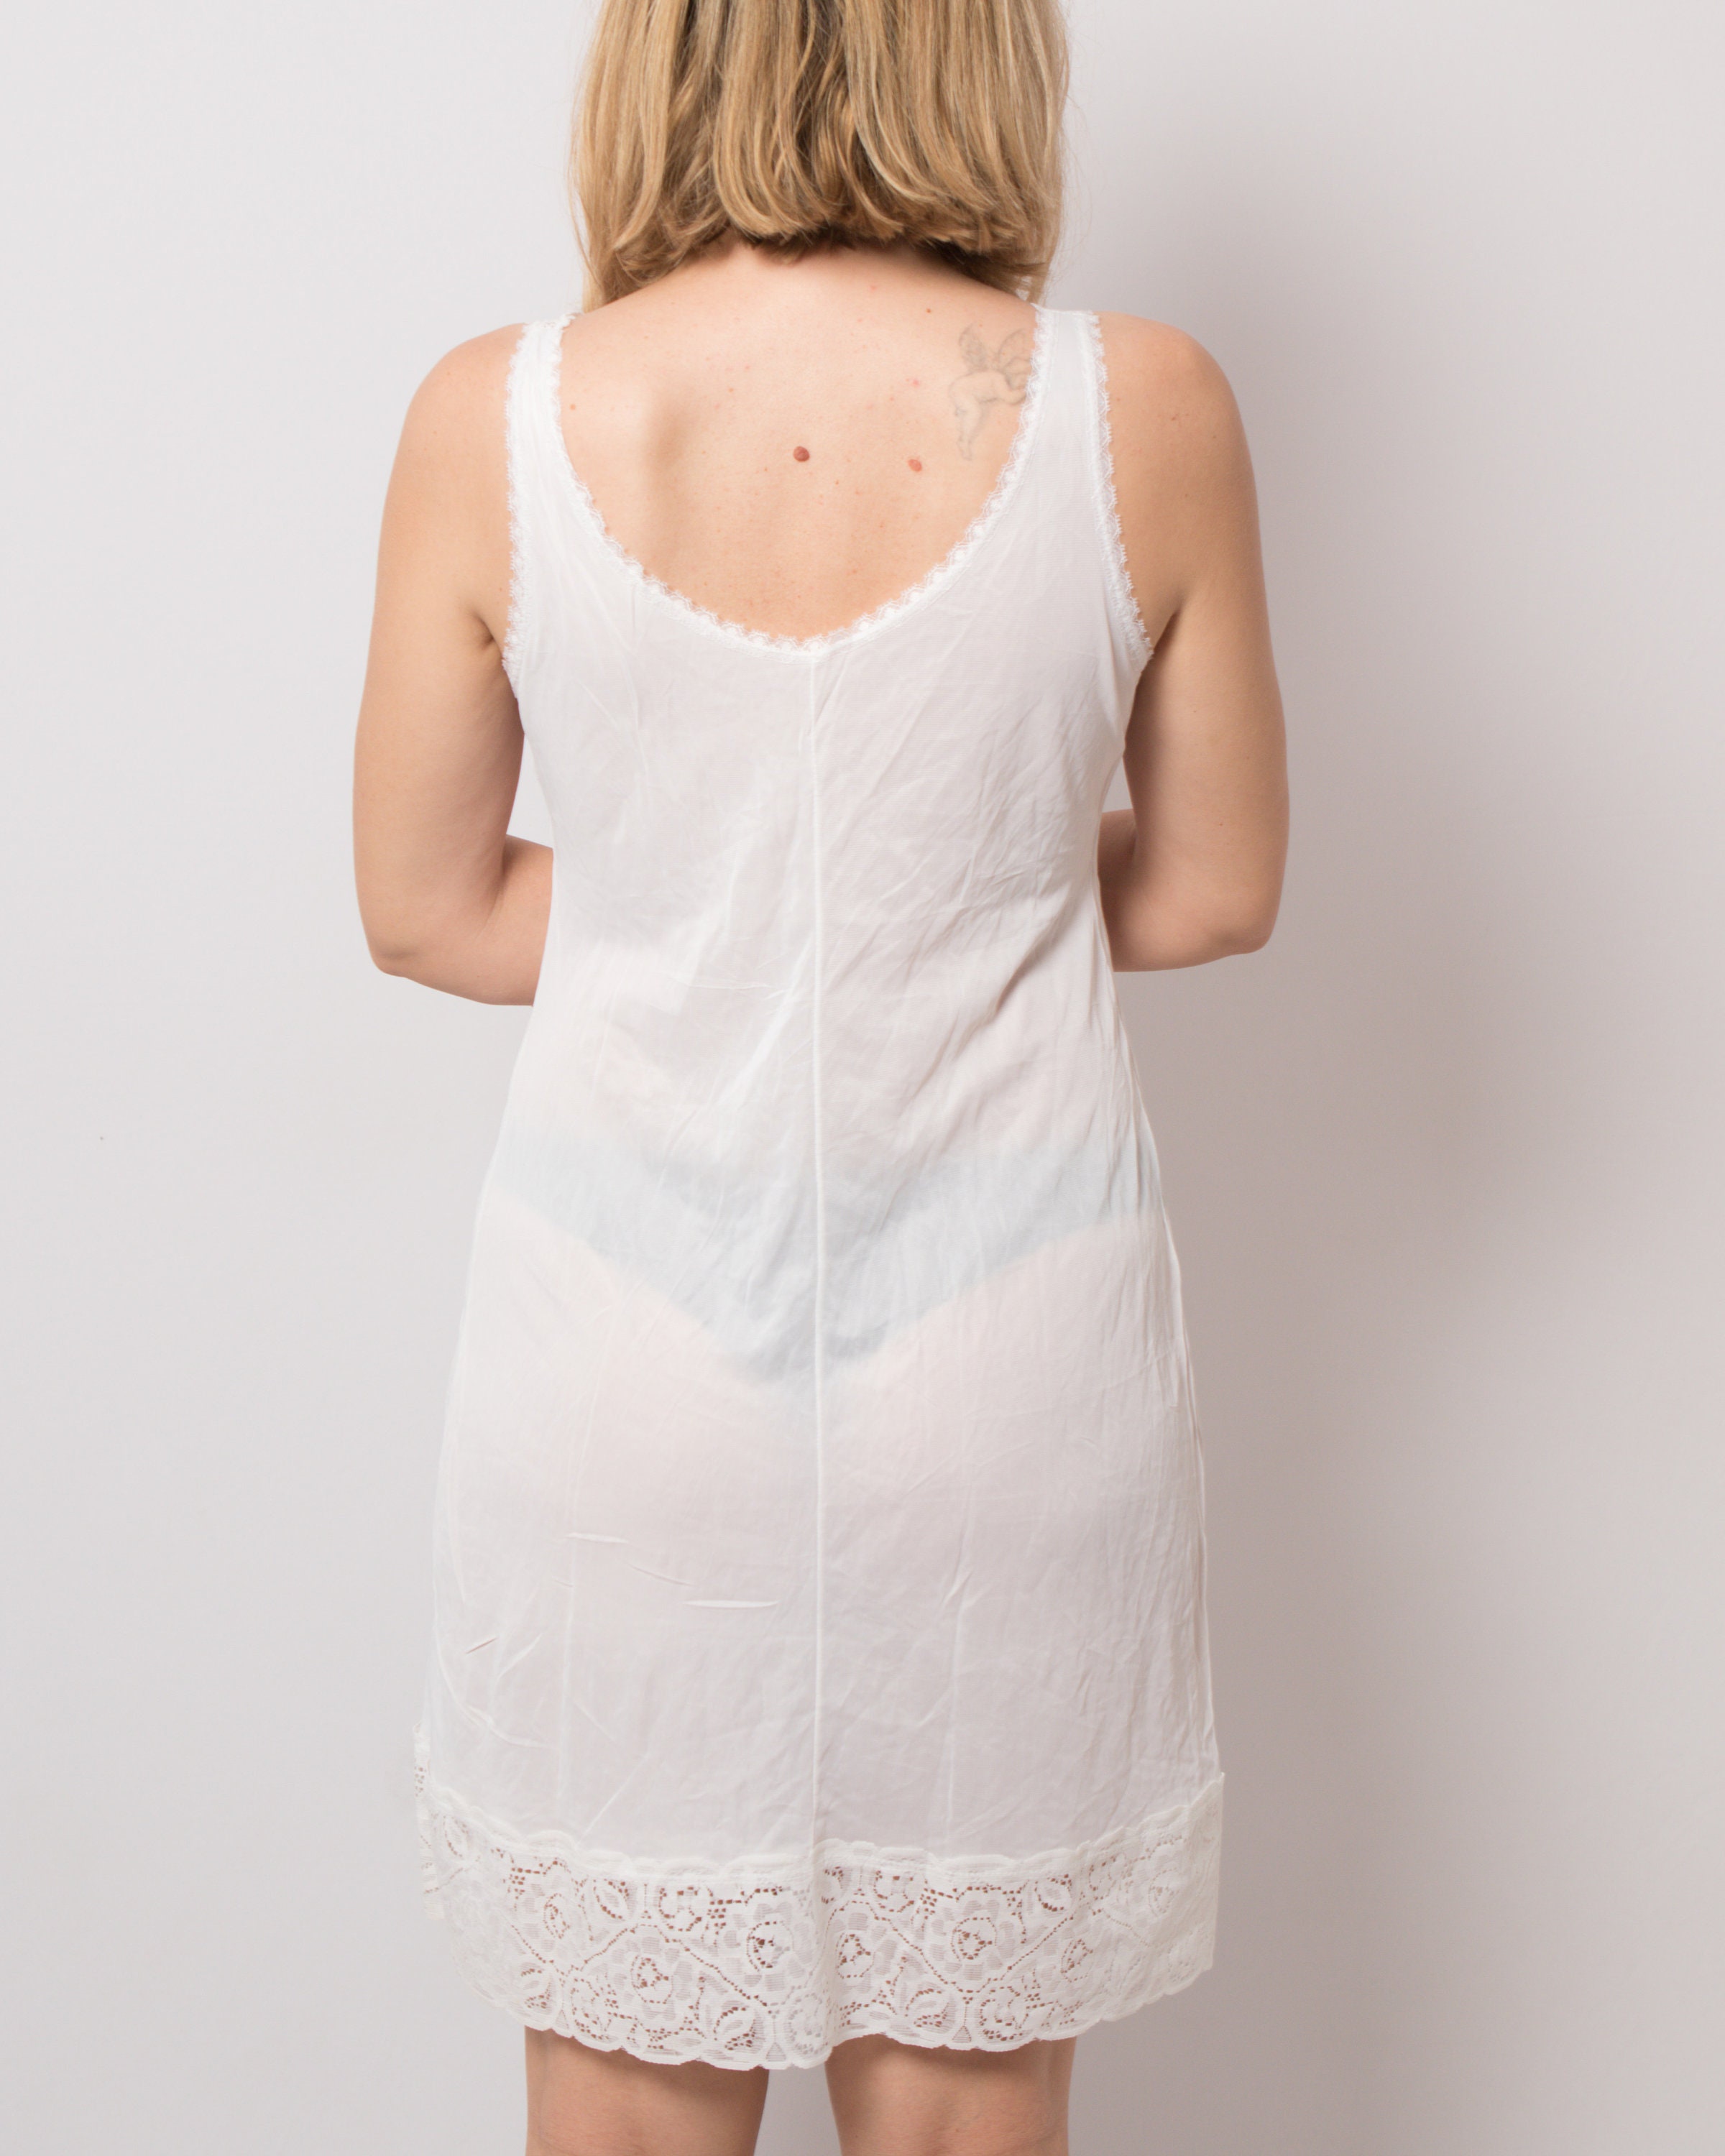 Vintage White Full Slip Dress Under Dress See Through Underdress